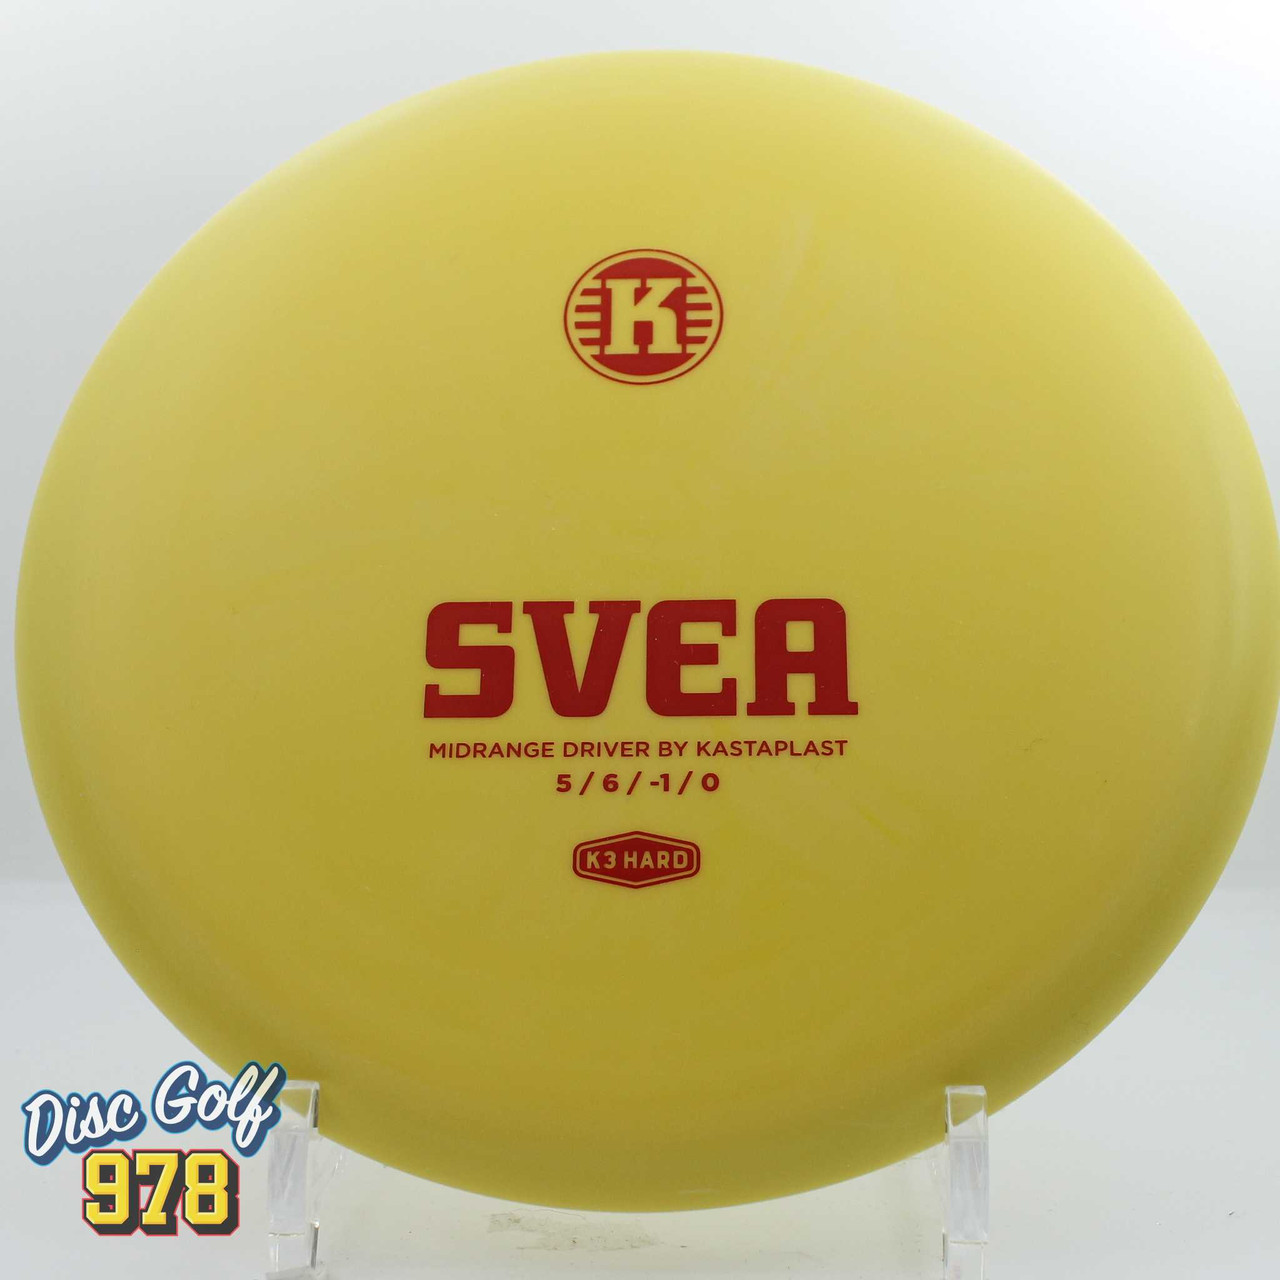 Kastaplast Svea K3 Hard Yellow-Red 173.9g